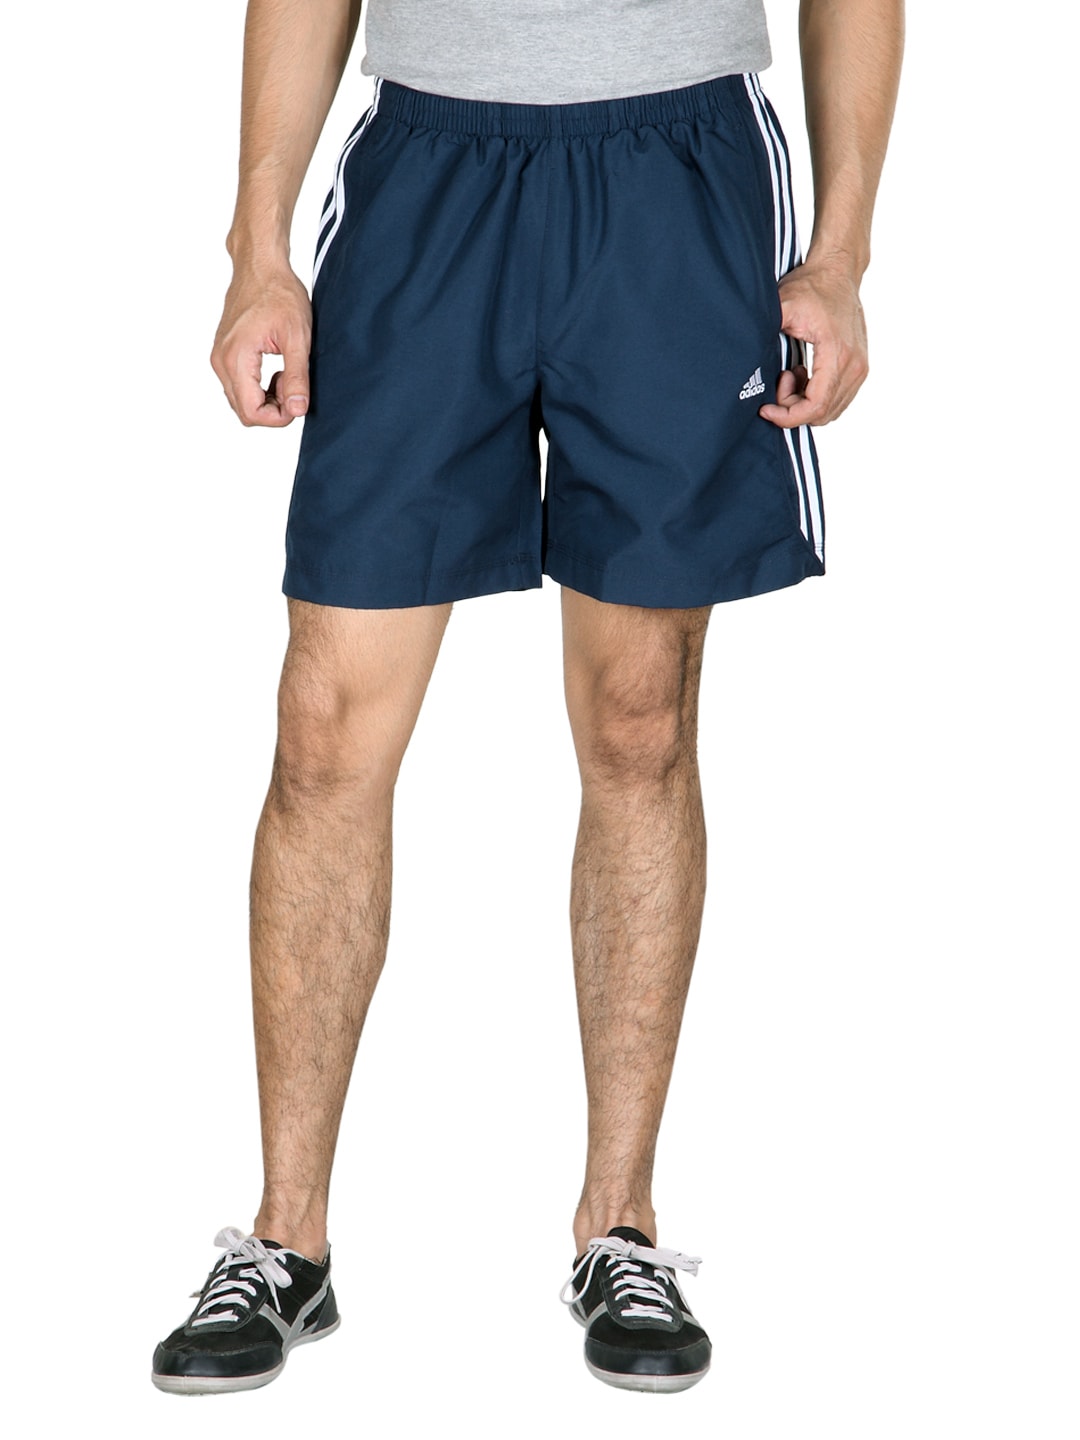 ADIDAS Men Navy Blue Shorts